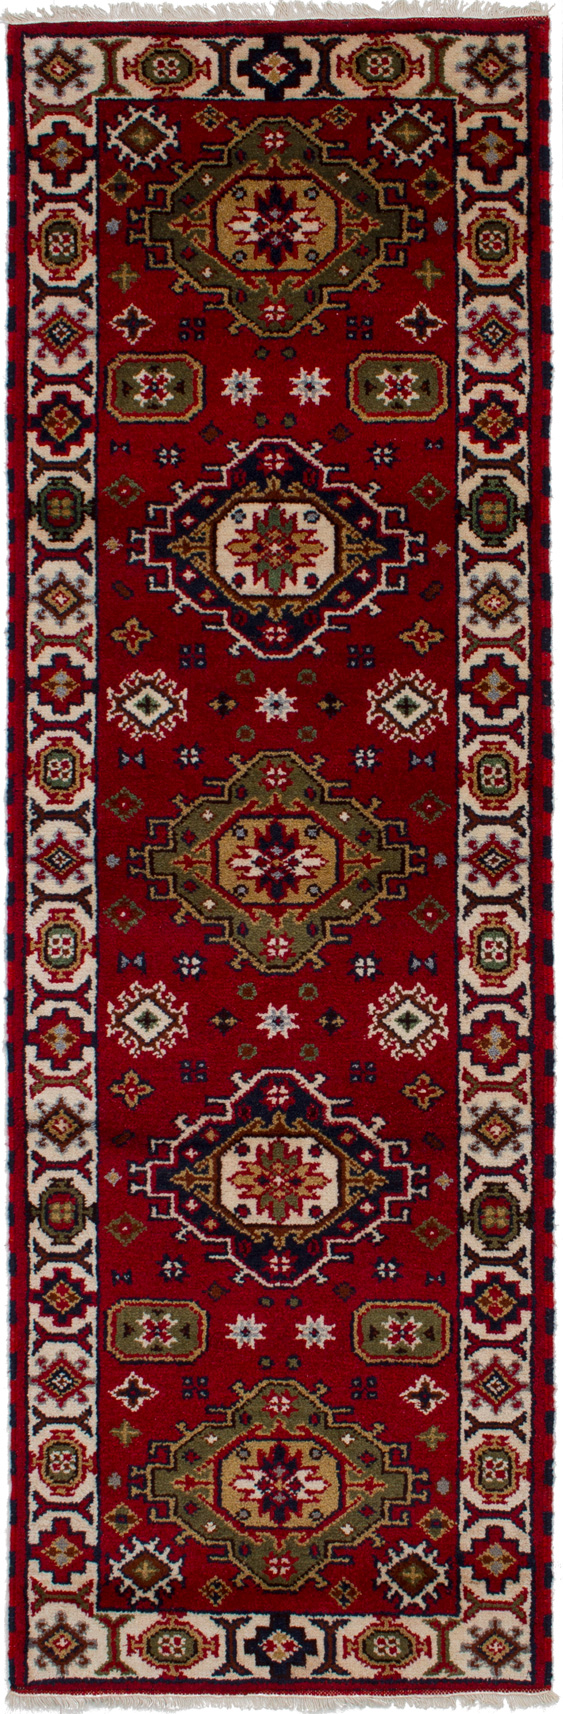 Hand-knotted Royal Kazak Dark Red Wool Rug 2'9" x 8'3"  Size: 2'9" x 8'3"  